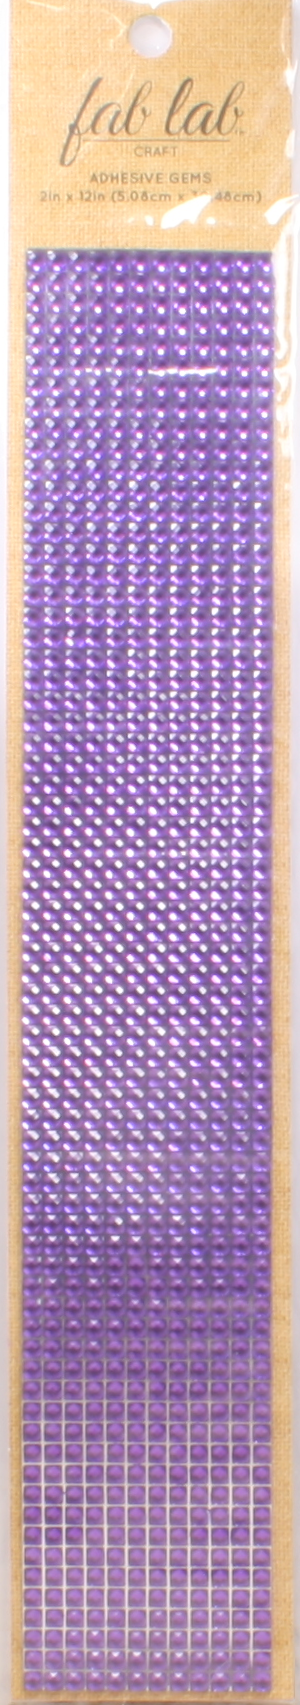 4mm Purple Adhesive Gems